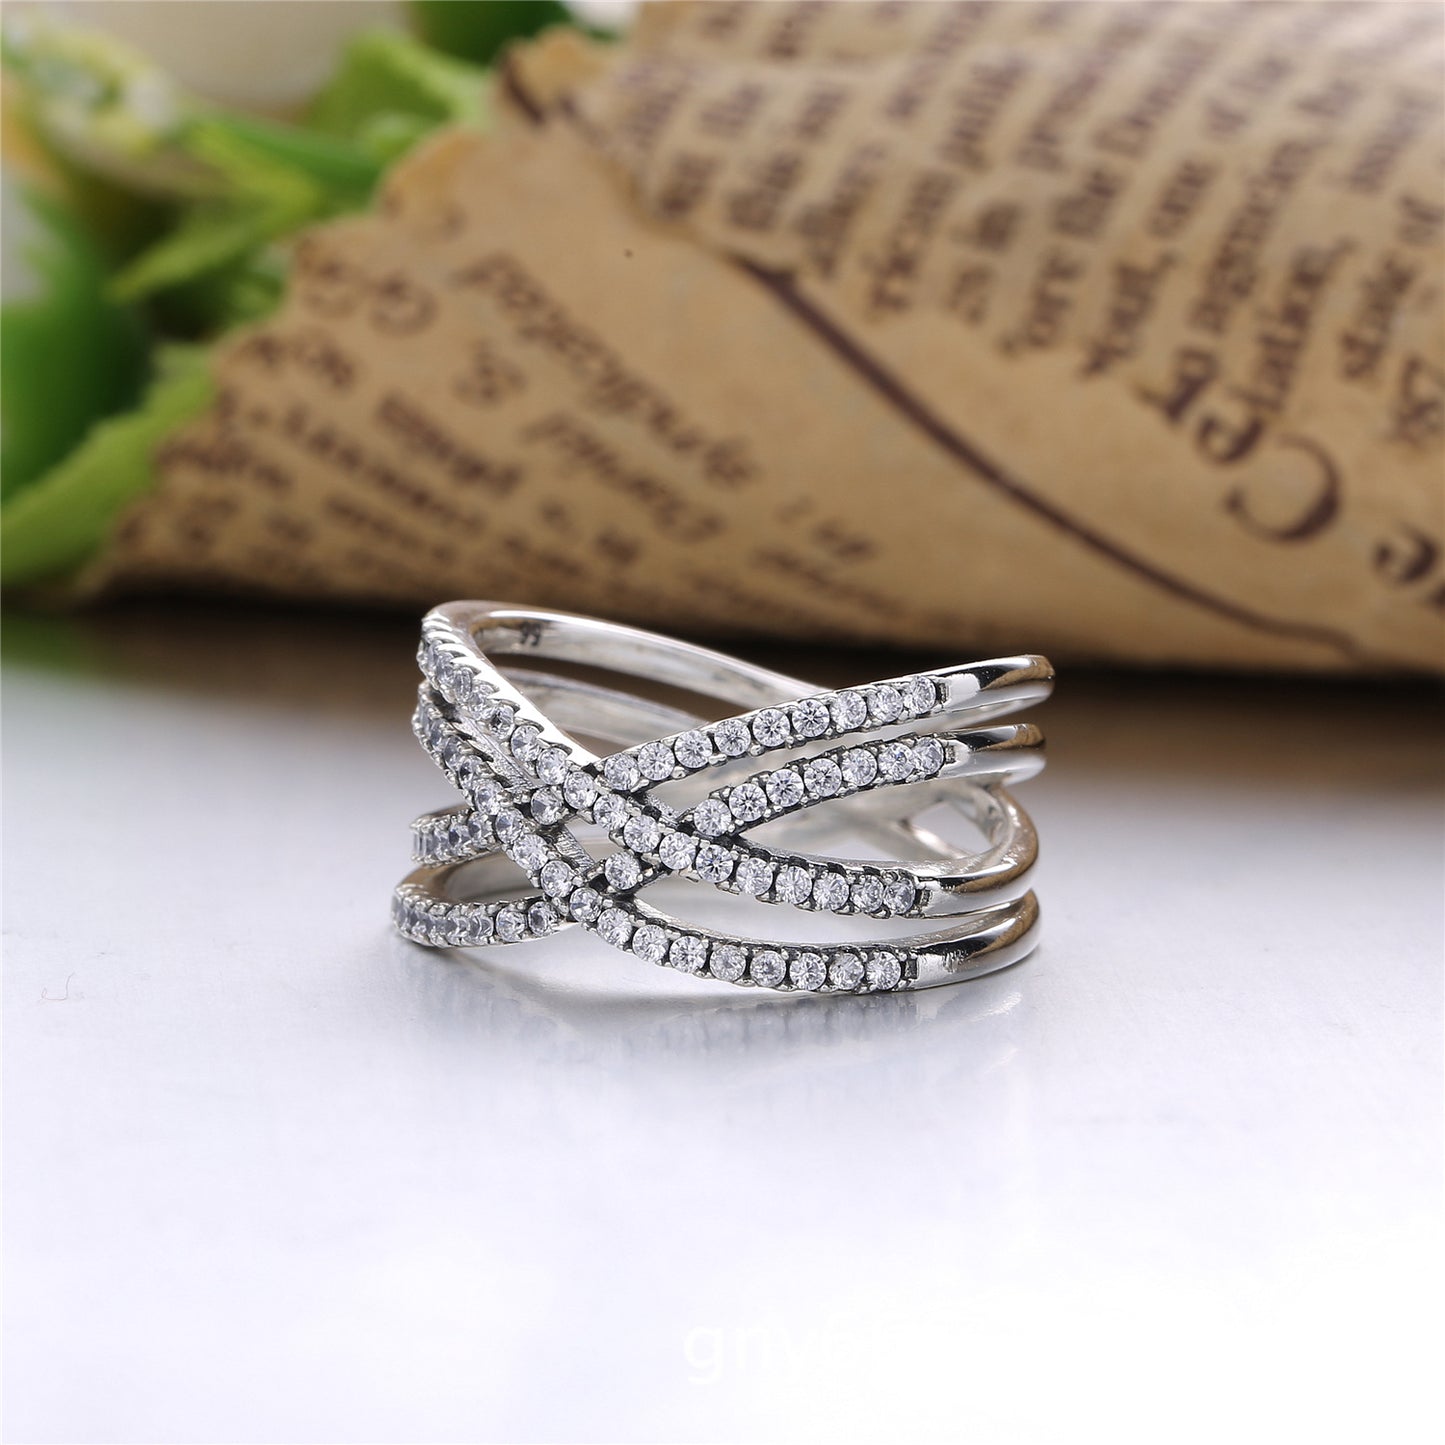 Vintage Cross Sterling Silver Wedding Rings for Women